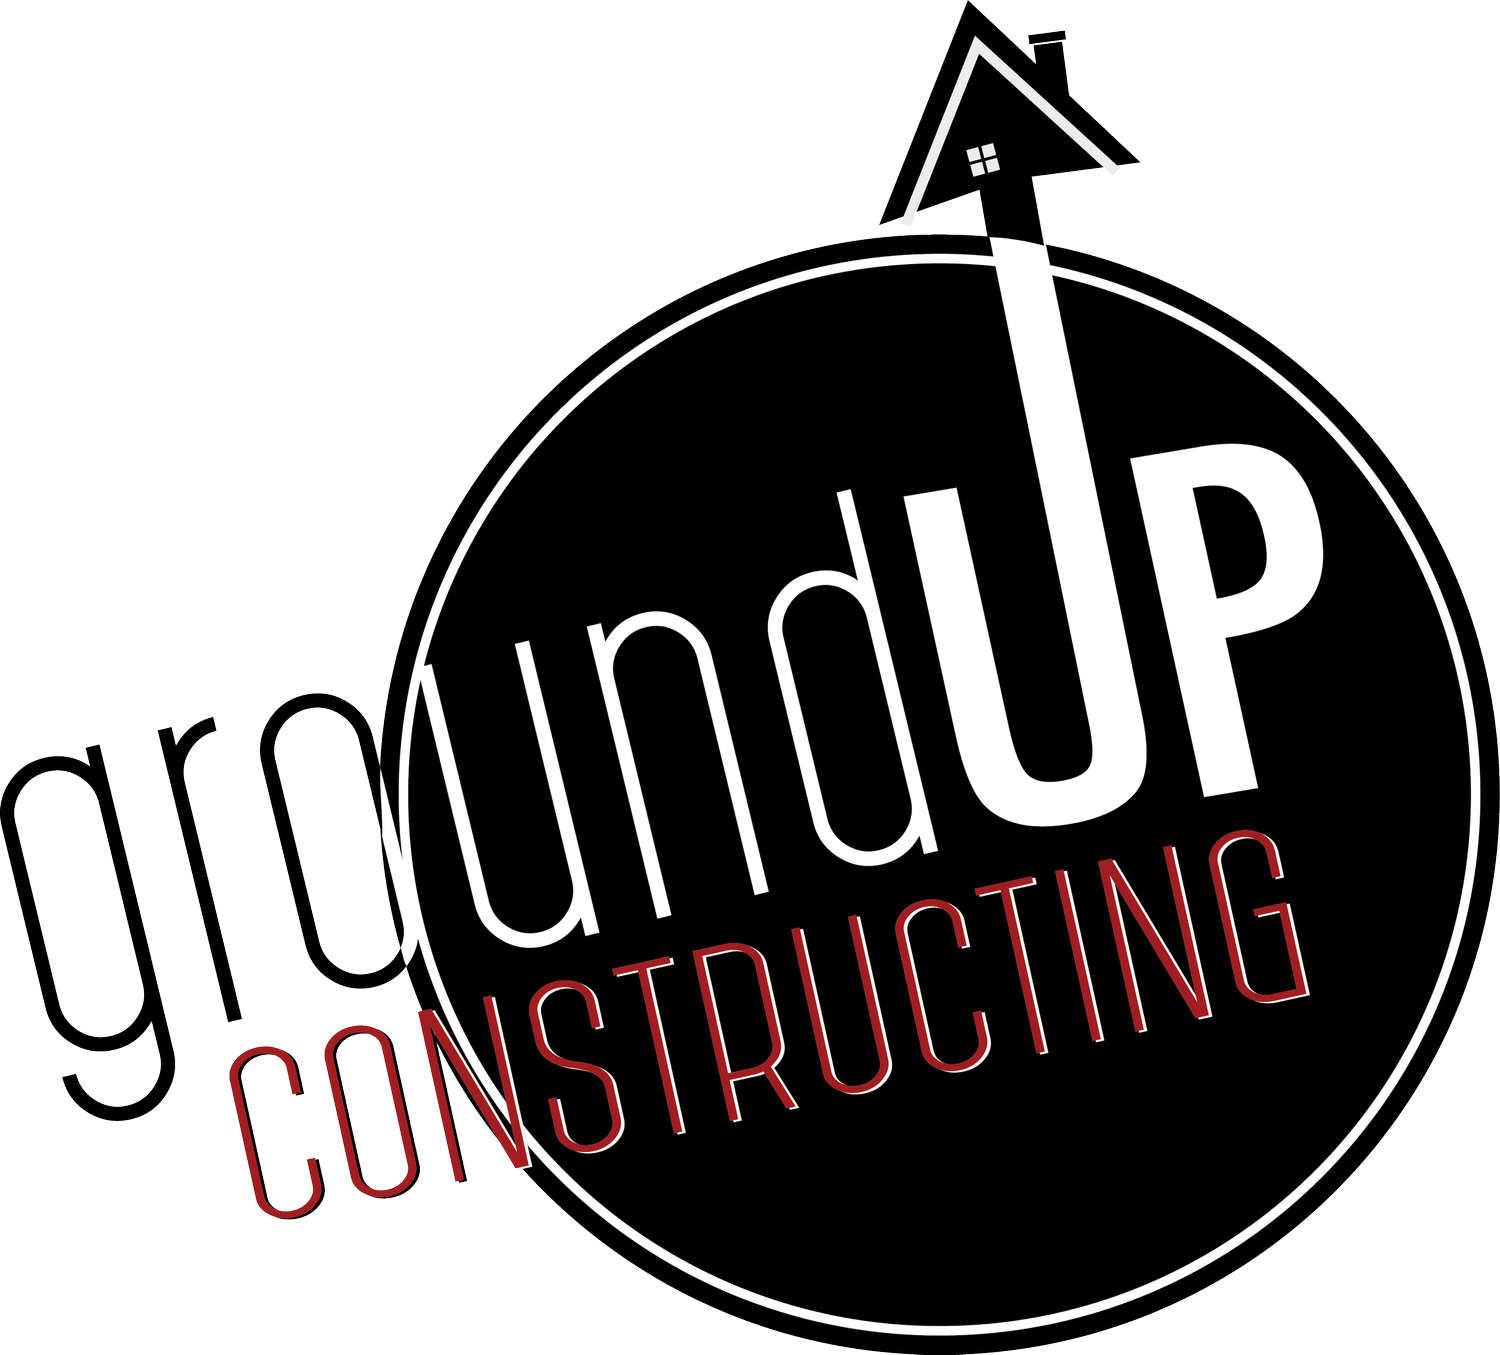 Ground Up Constructing